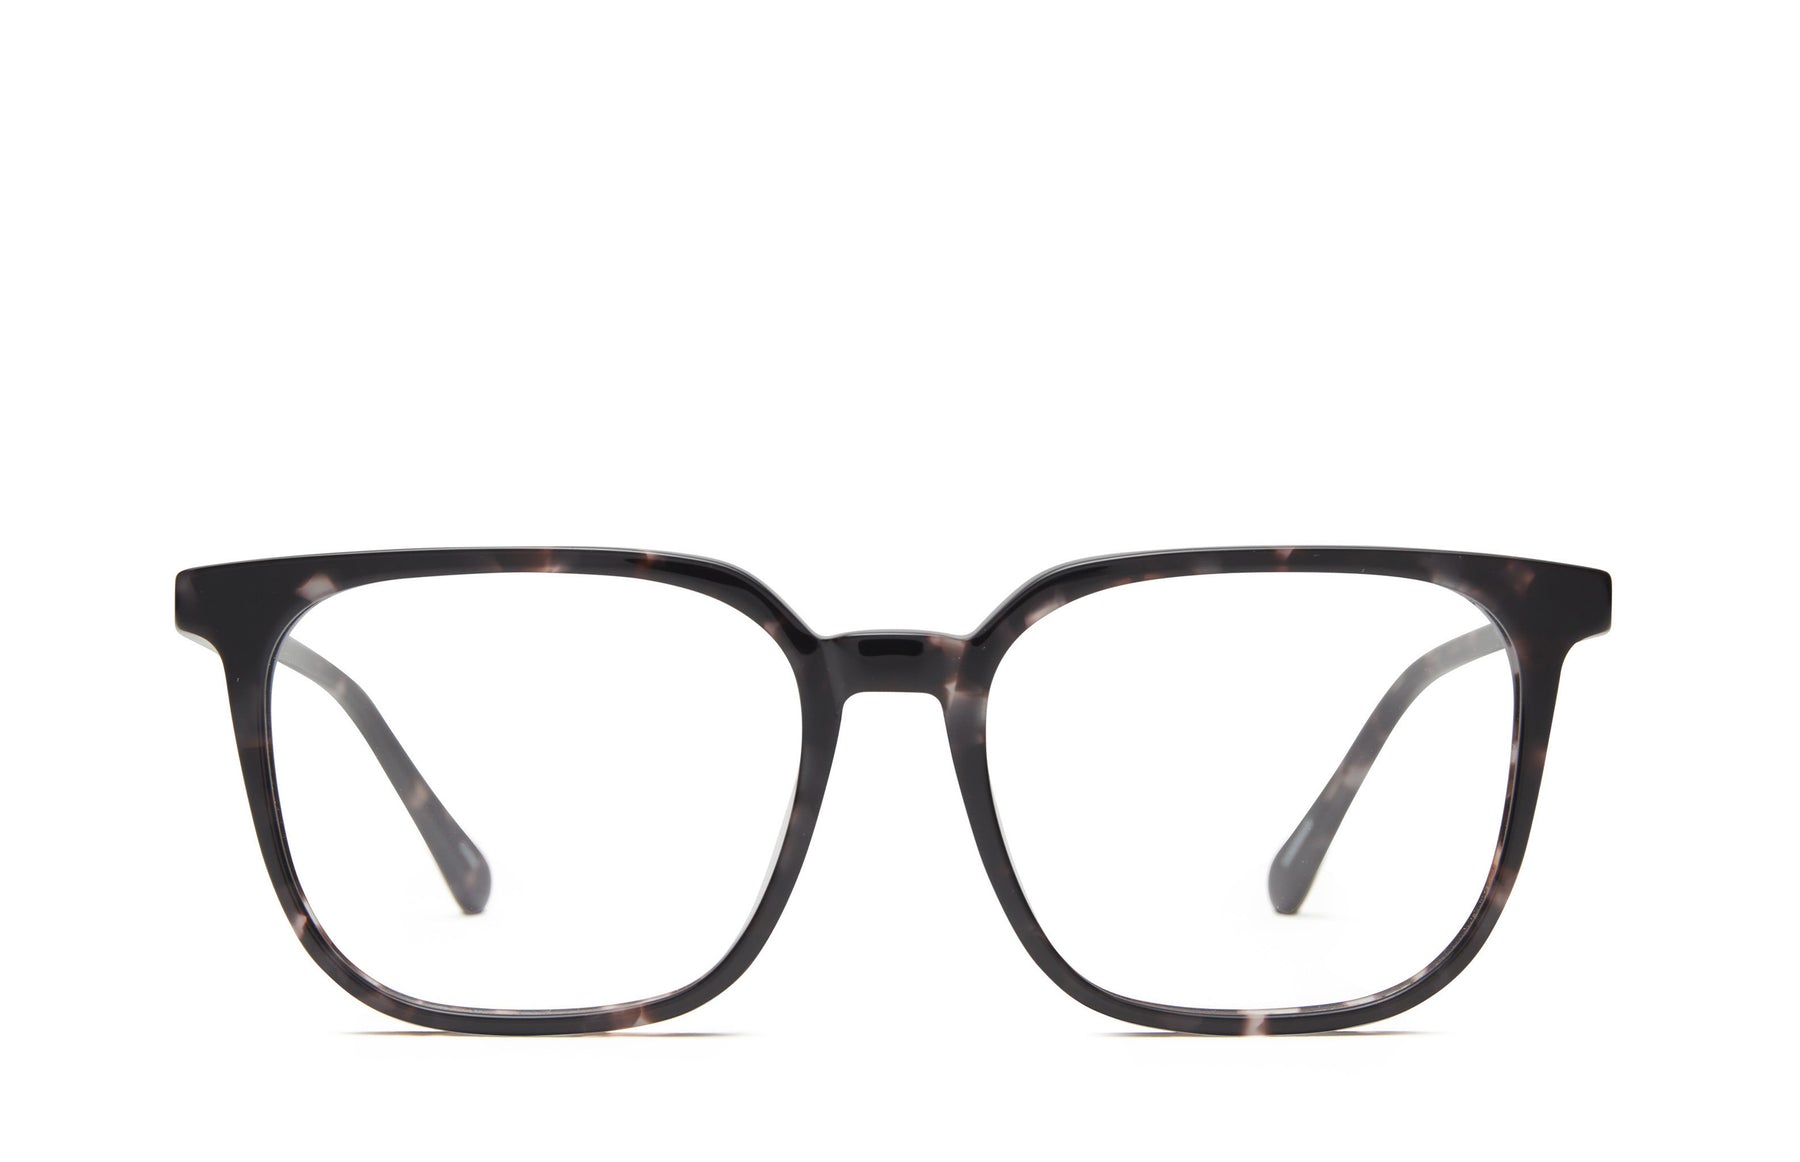 Eyeglasses holder THREE noses - Walnut color